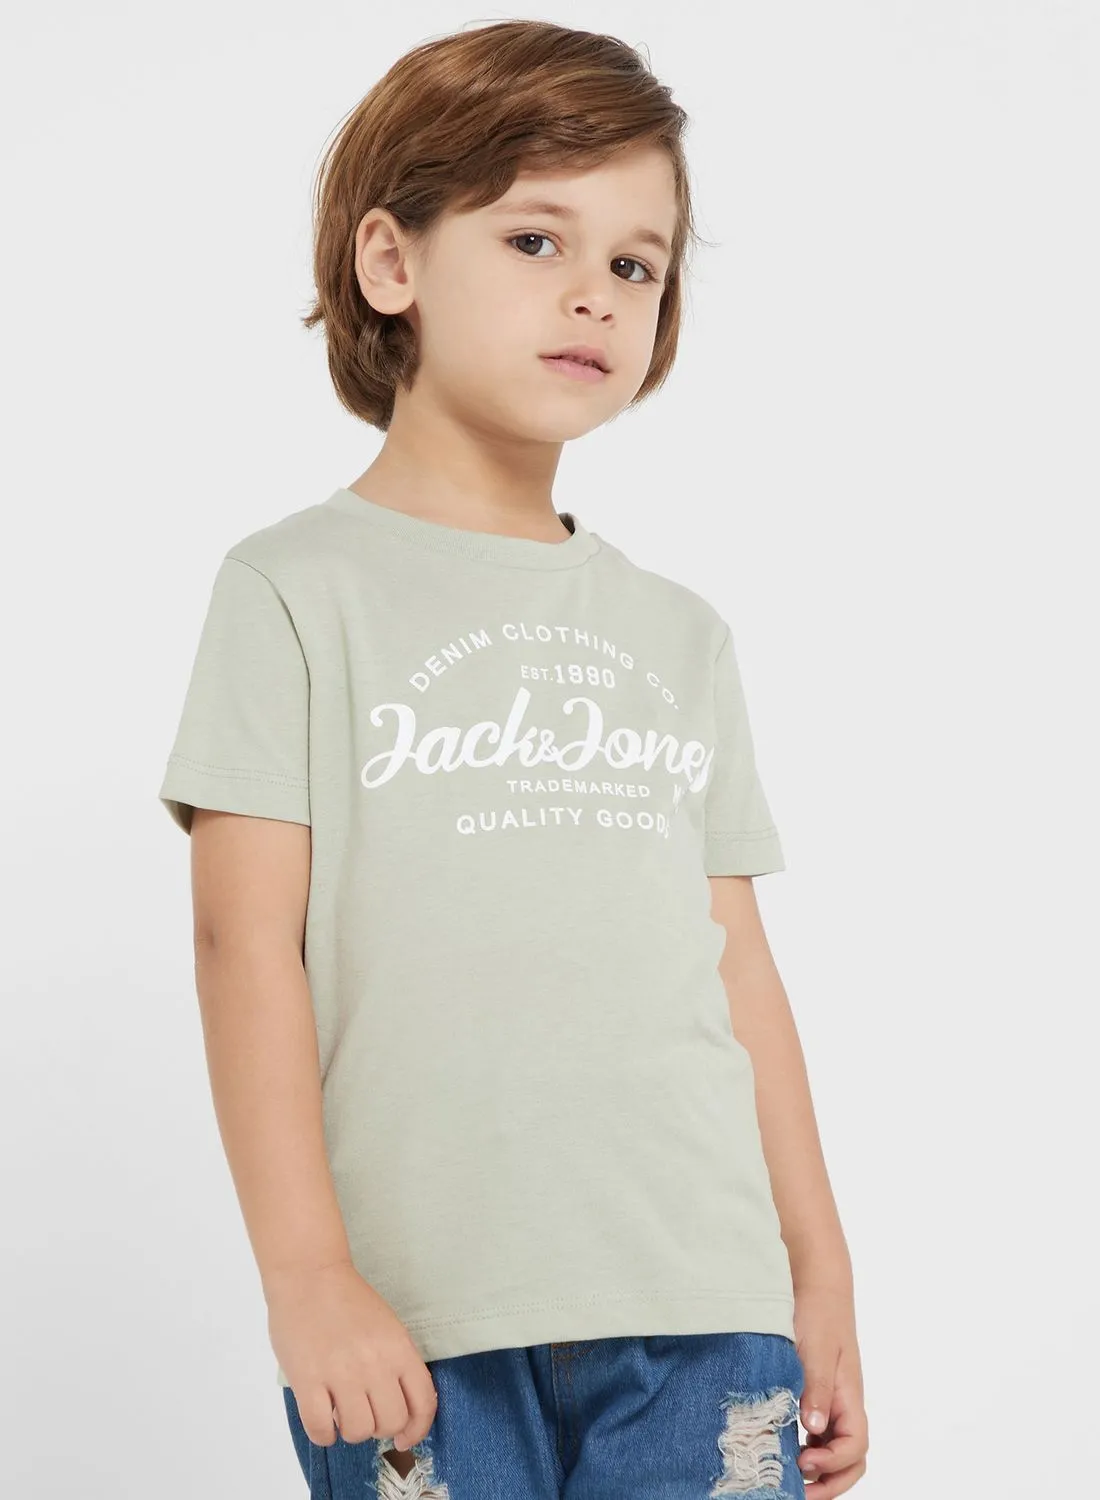 JACK & JONES Youth Slogan T-Shirt